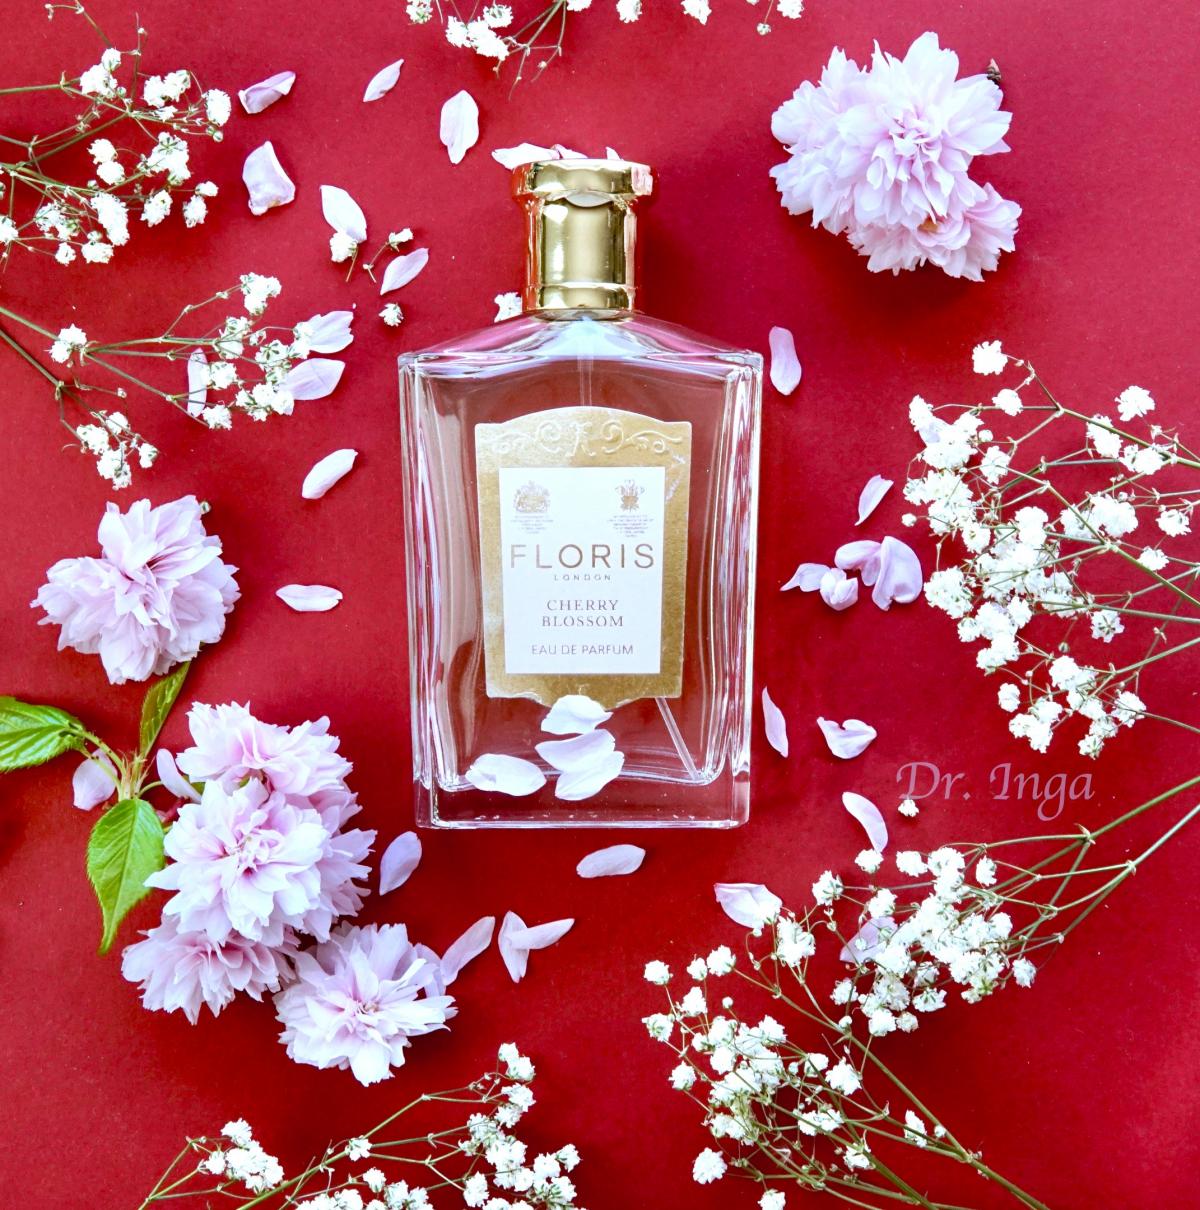 Cherry Blossom Floris perfume - a fragrance for women 2013